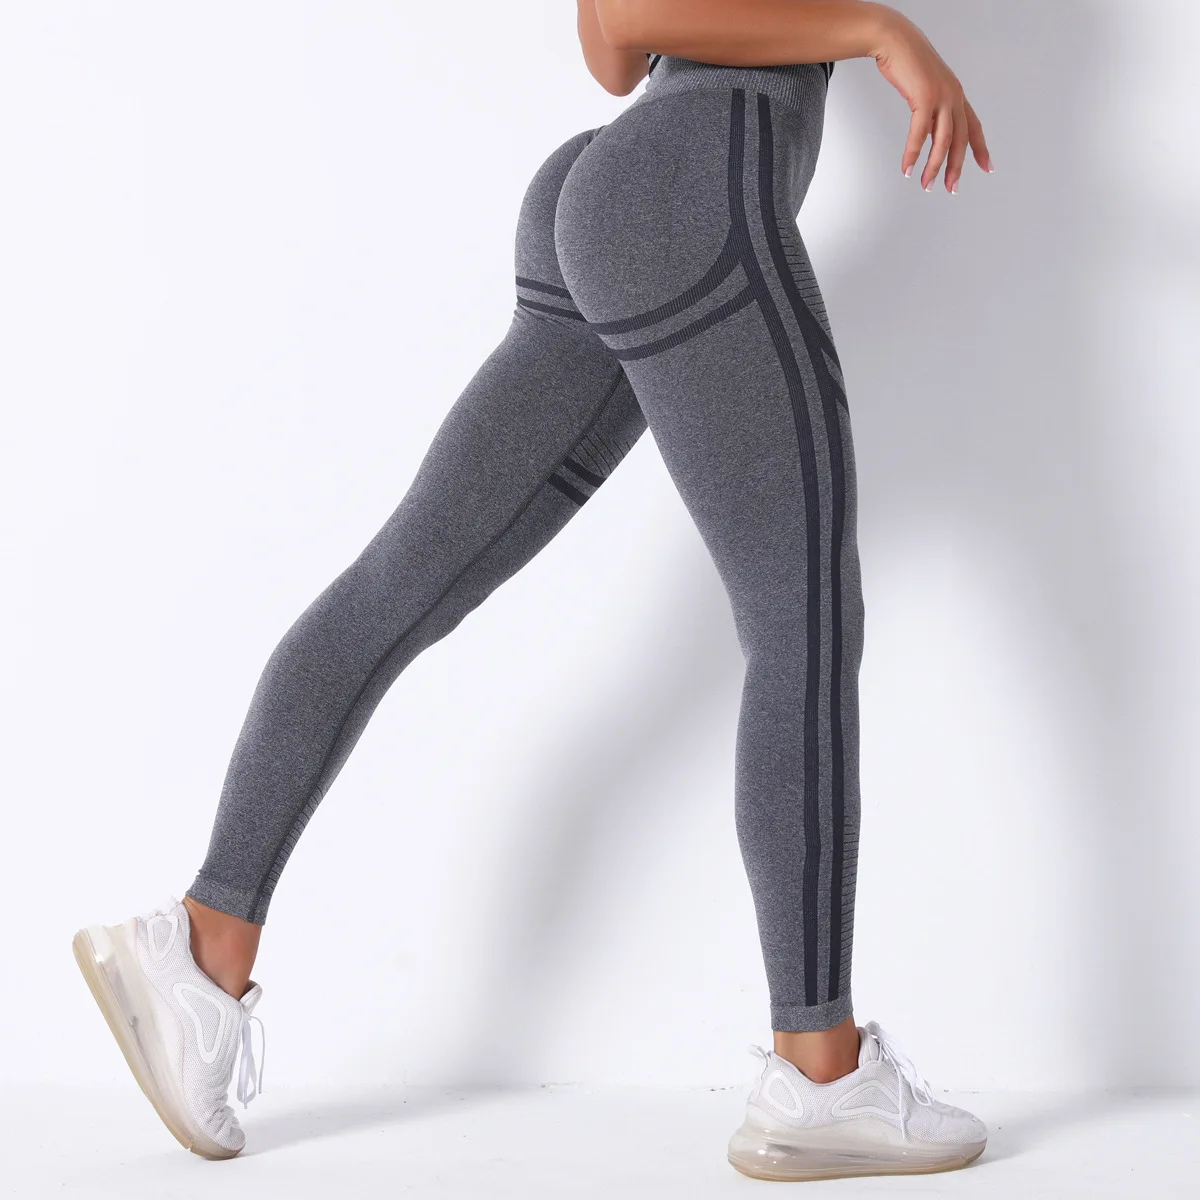 New Seamless Leggings Women Fitness Running Yoga Pants High Waist Gym Leggins Sport Elastic Tights Workout Suits Feminina